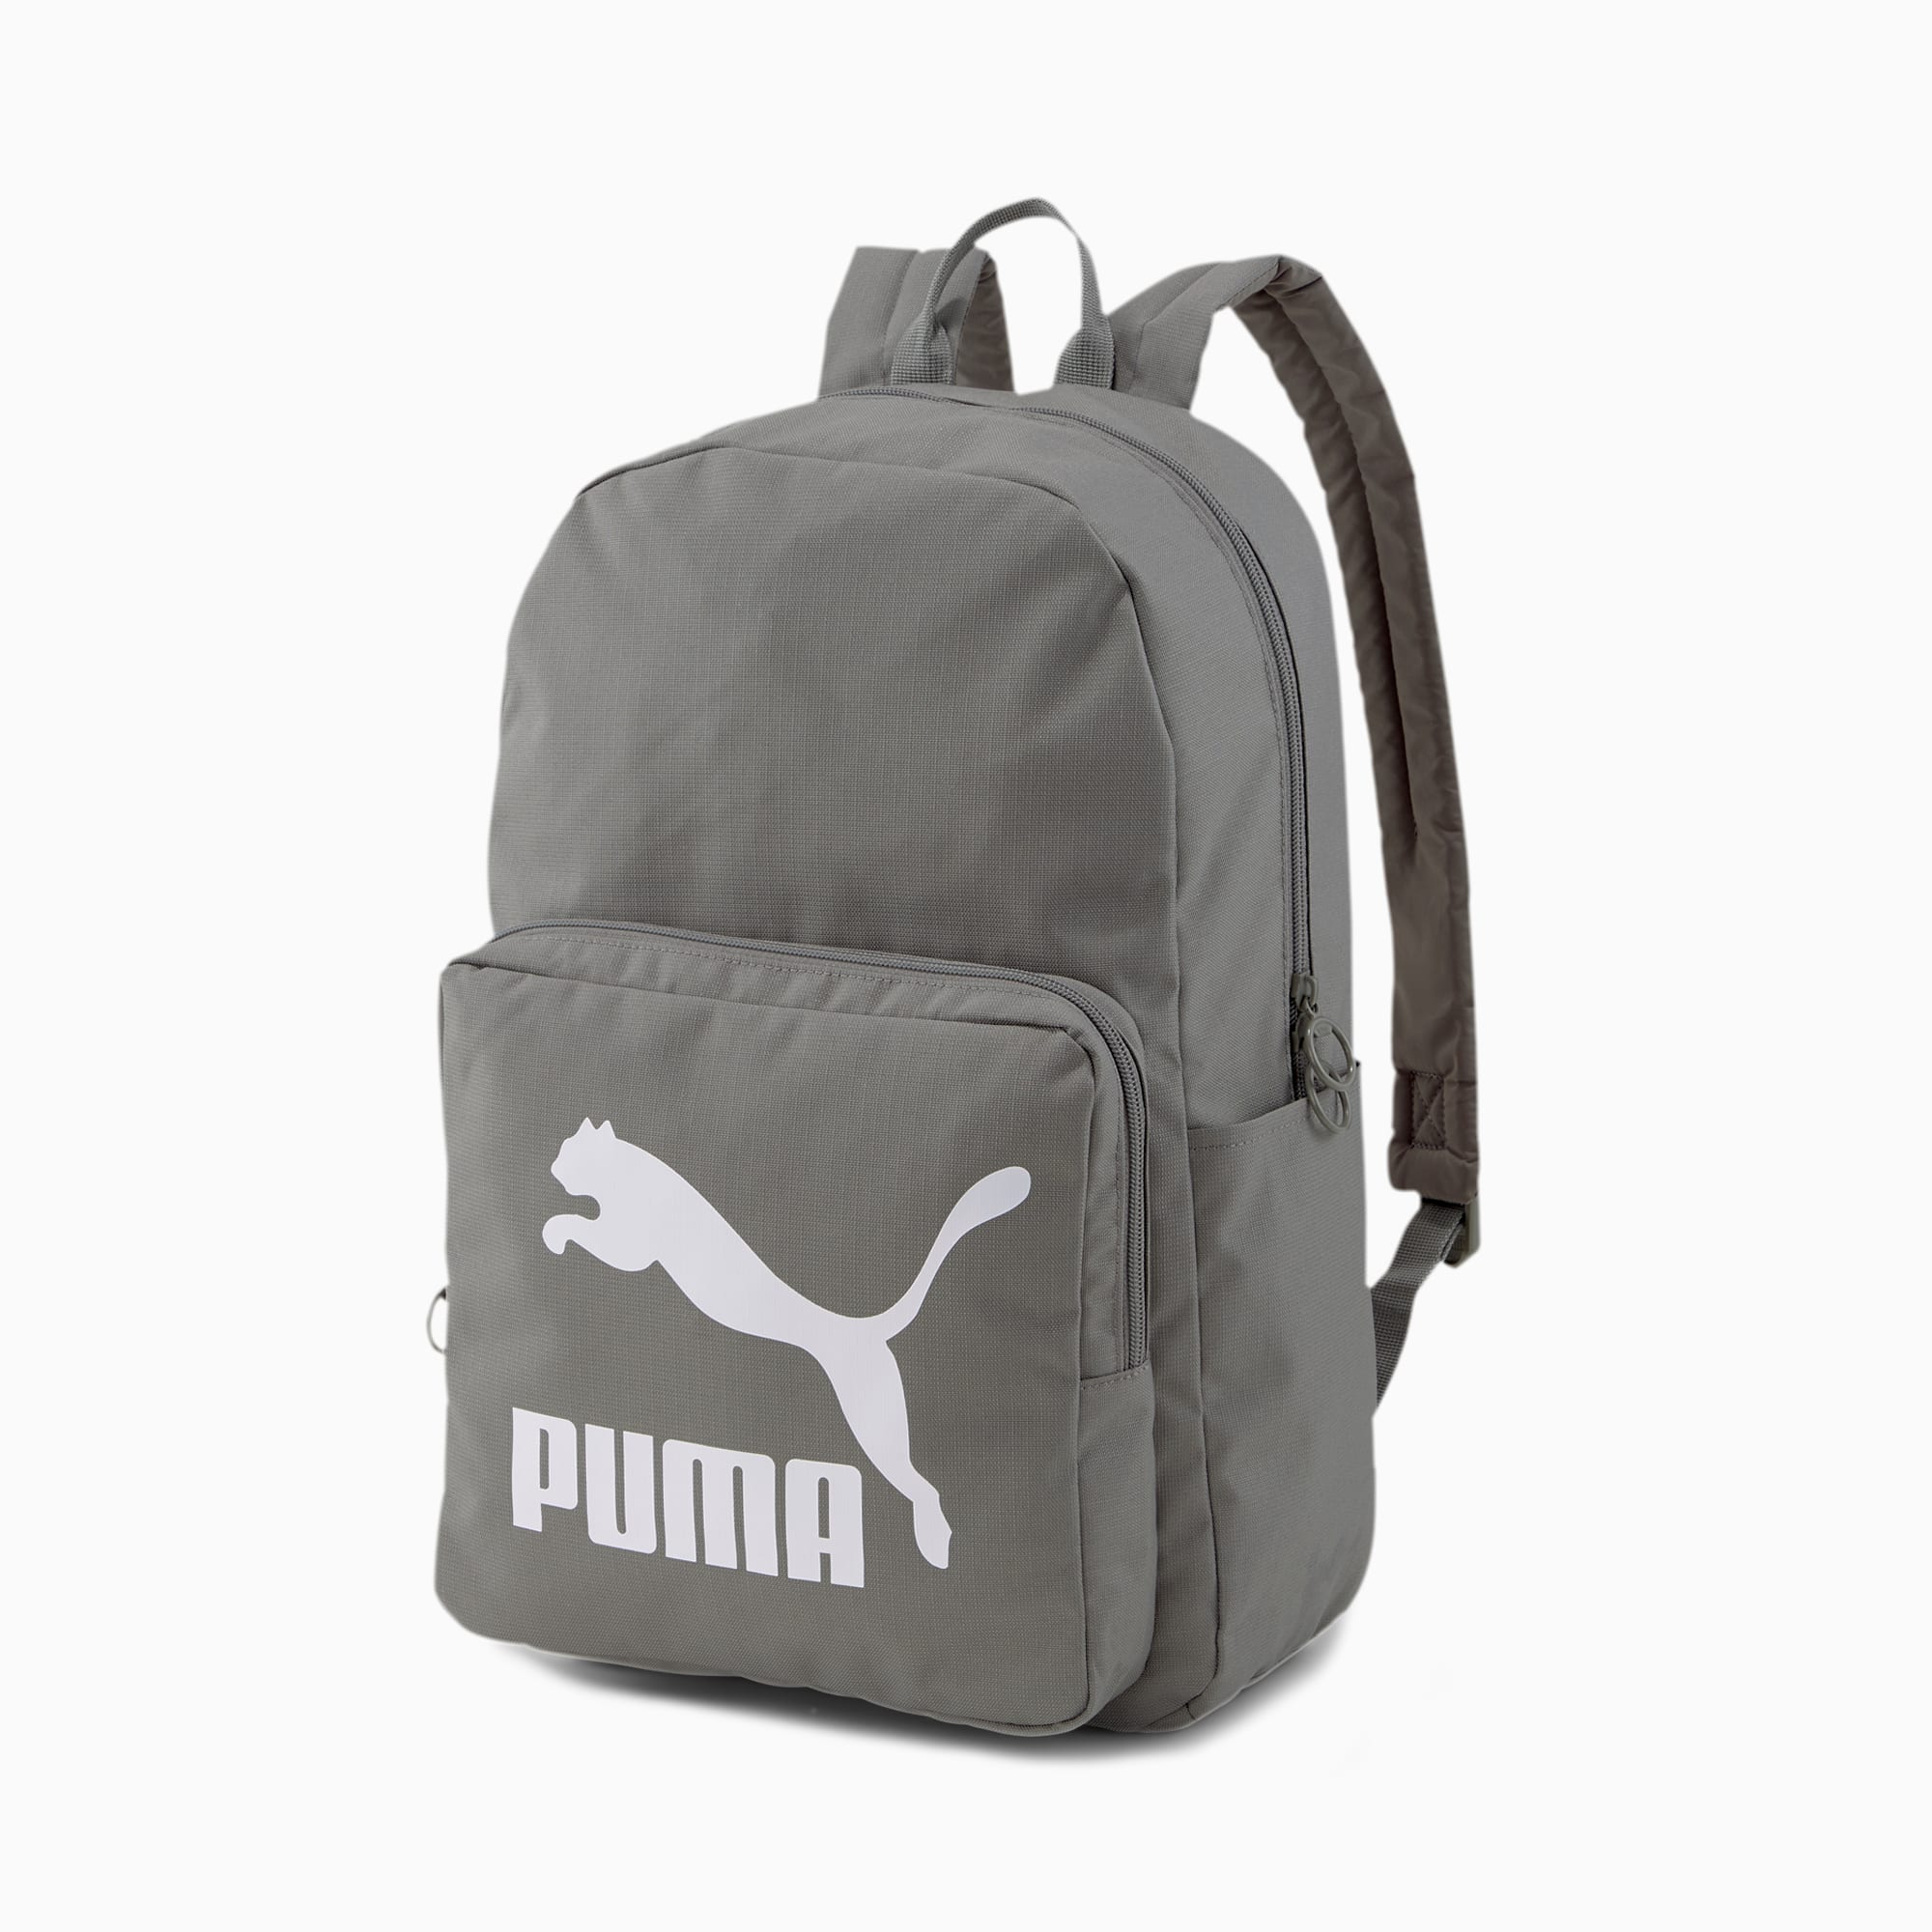 puma backpack rose gold